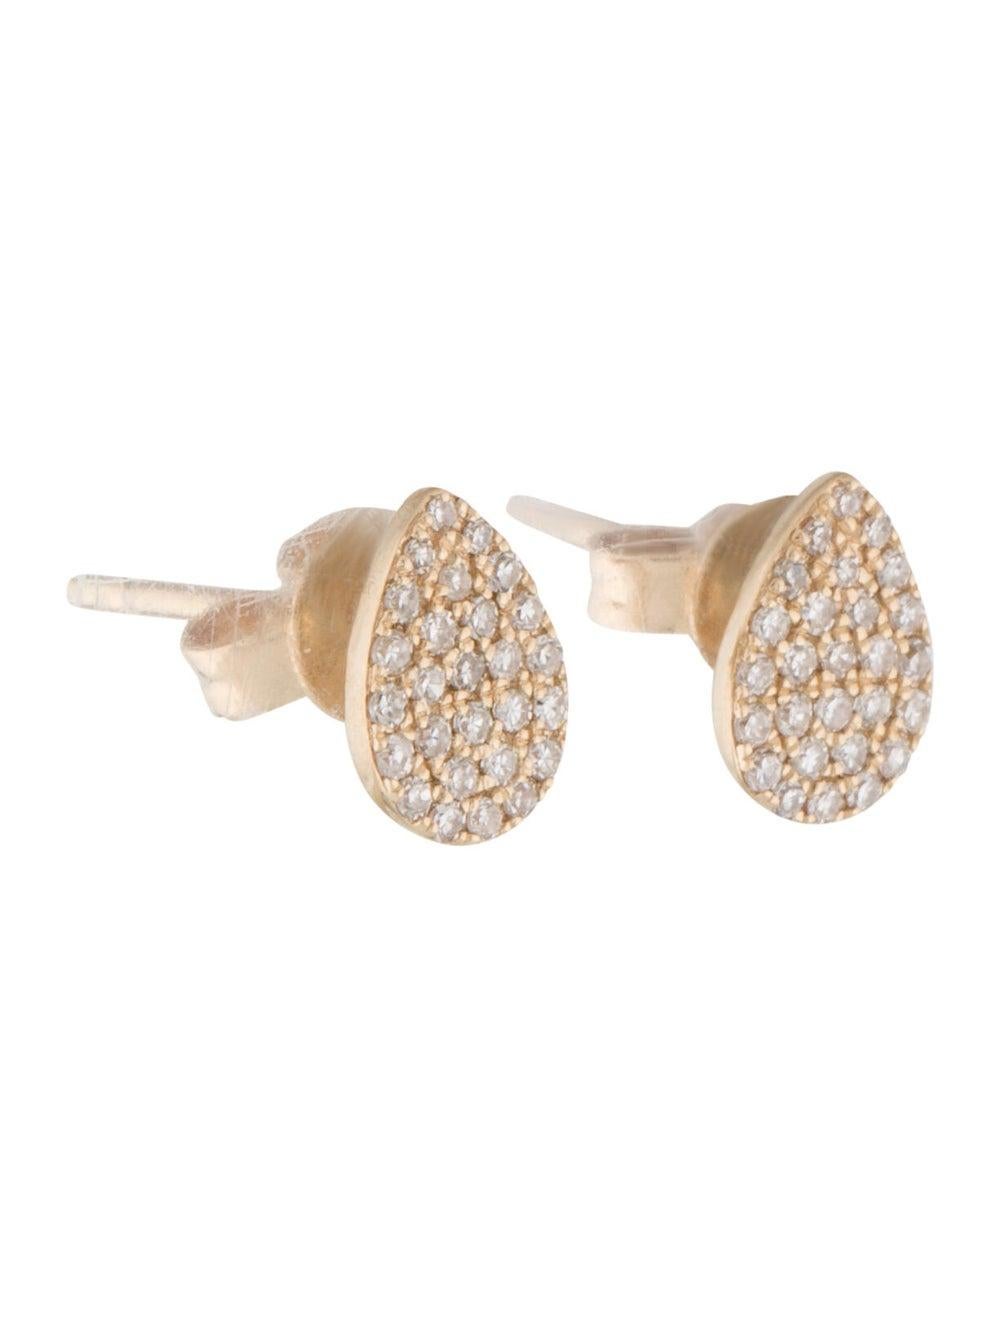 Baguette Cut 14K Rose Gold Diamond Pave Pear Shape Stud Earrings for Her For Sale